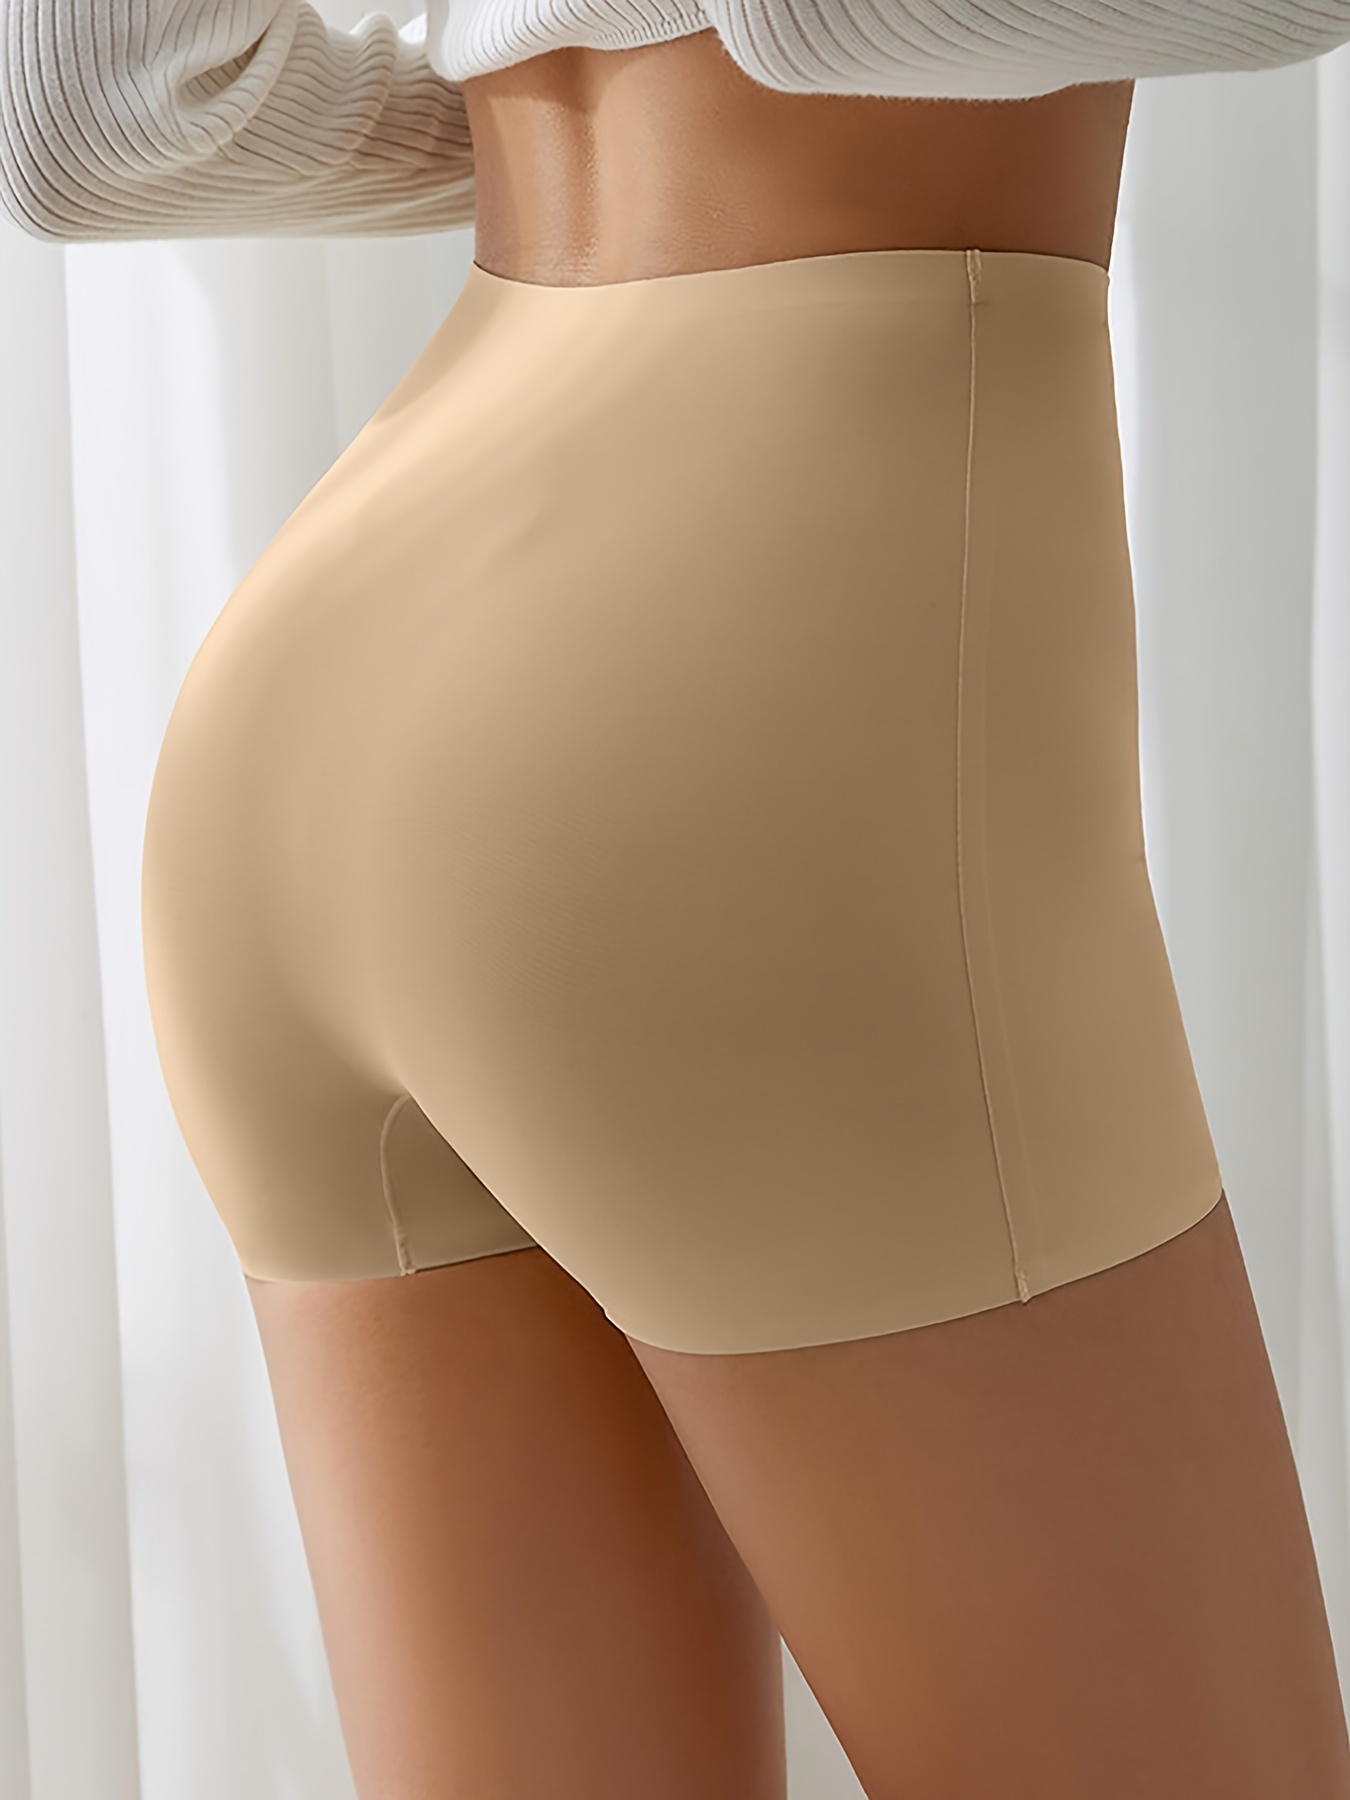 Women Butt Lifter Panty Fake Buttock Body Shaper Padded Underwear Lady Lift  Bum High Waist Tummy Control Hip Panties